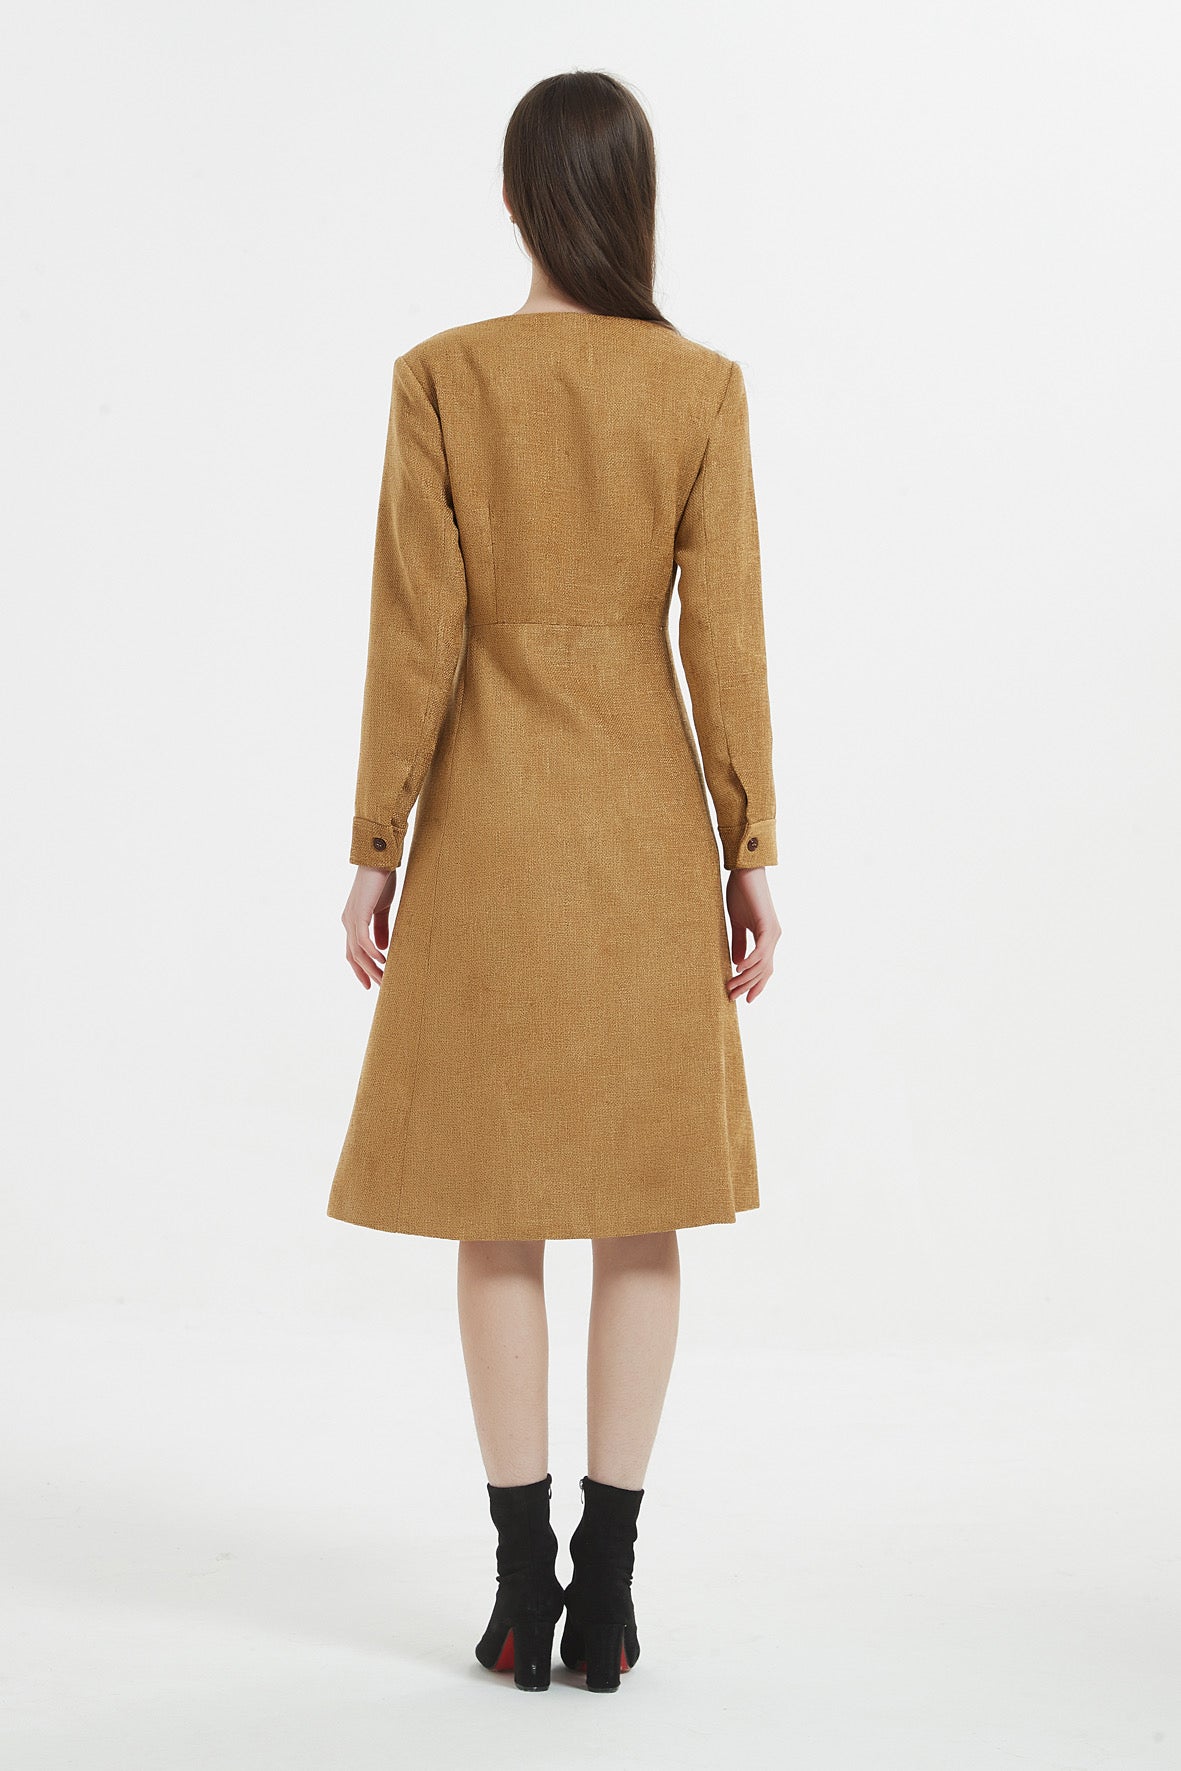 SKYE Shop Chic Modern Elegant Timeless Women Clothing French Parisian Minimalist Emilia Tweed Dress brown 4